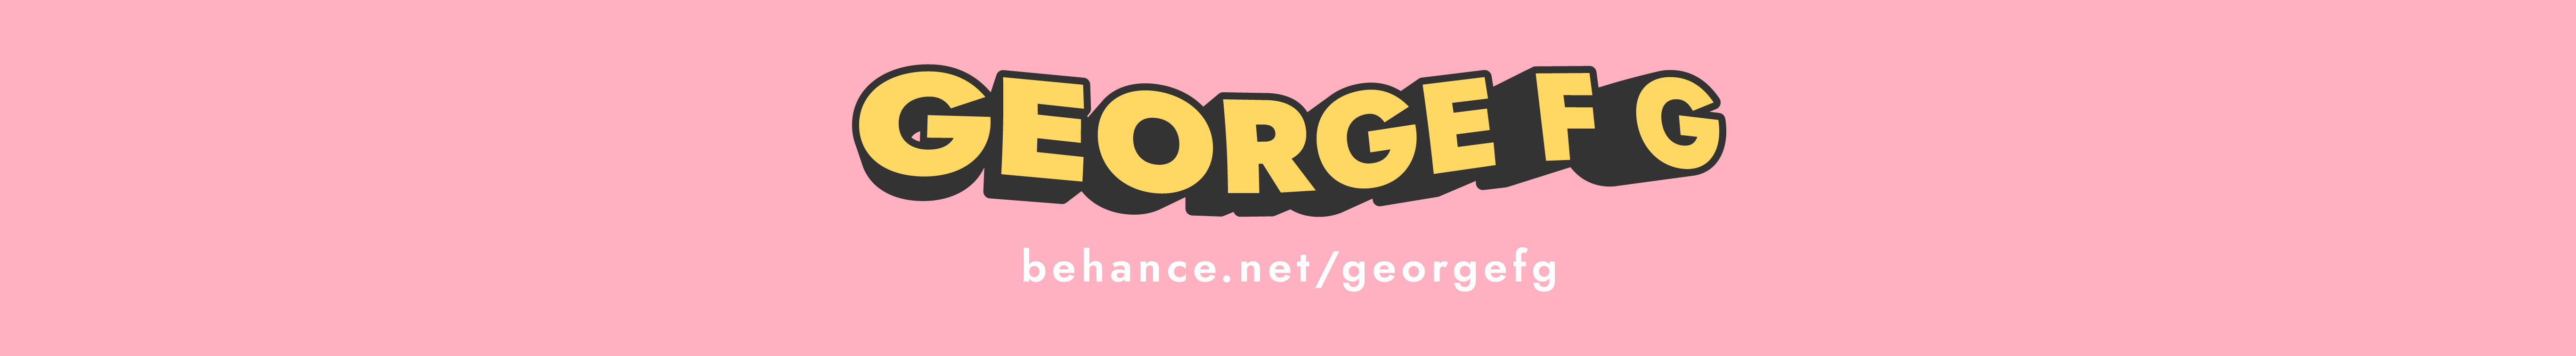 George F. G.'s profile banner